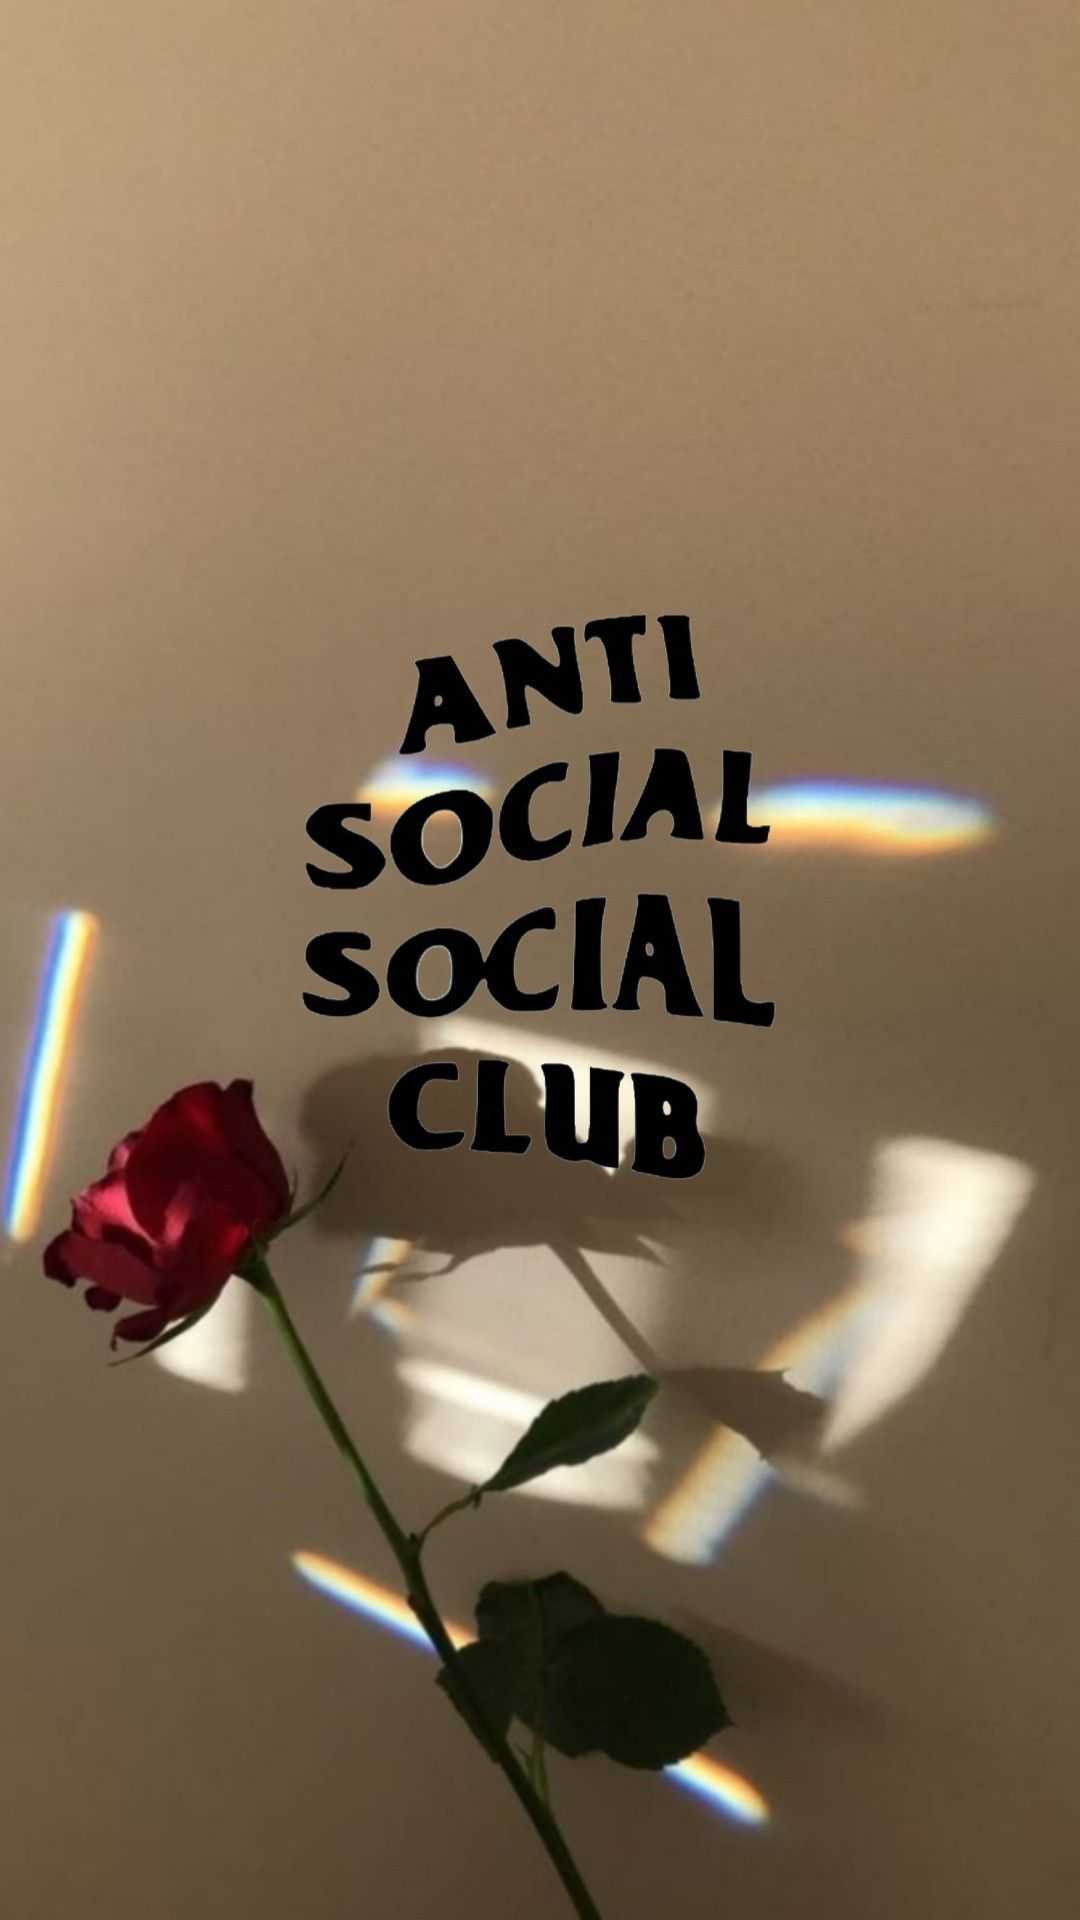 iPhone Anti Social Club Wallpaper 1